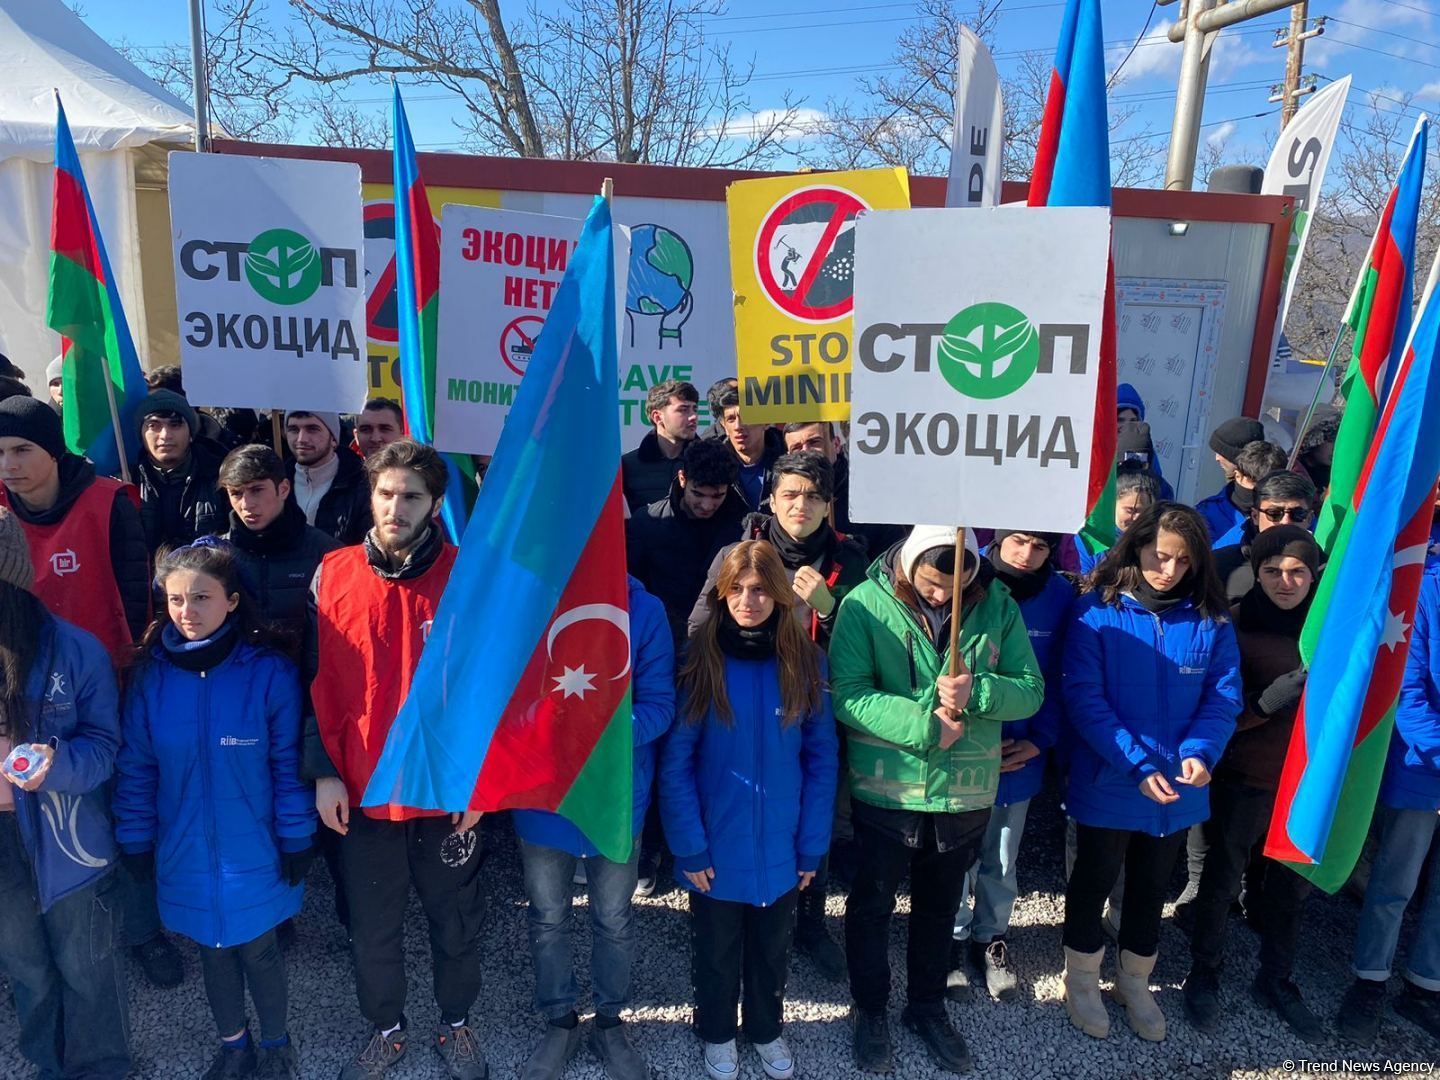 Day 68: Azerbaijanis alert on Khankanadi road with powerful slogans [PHOTO]